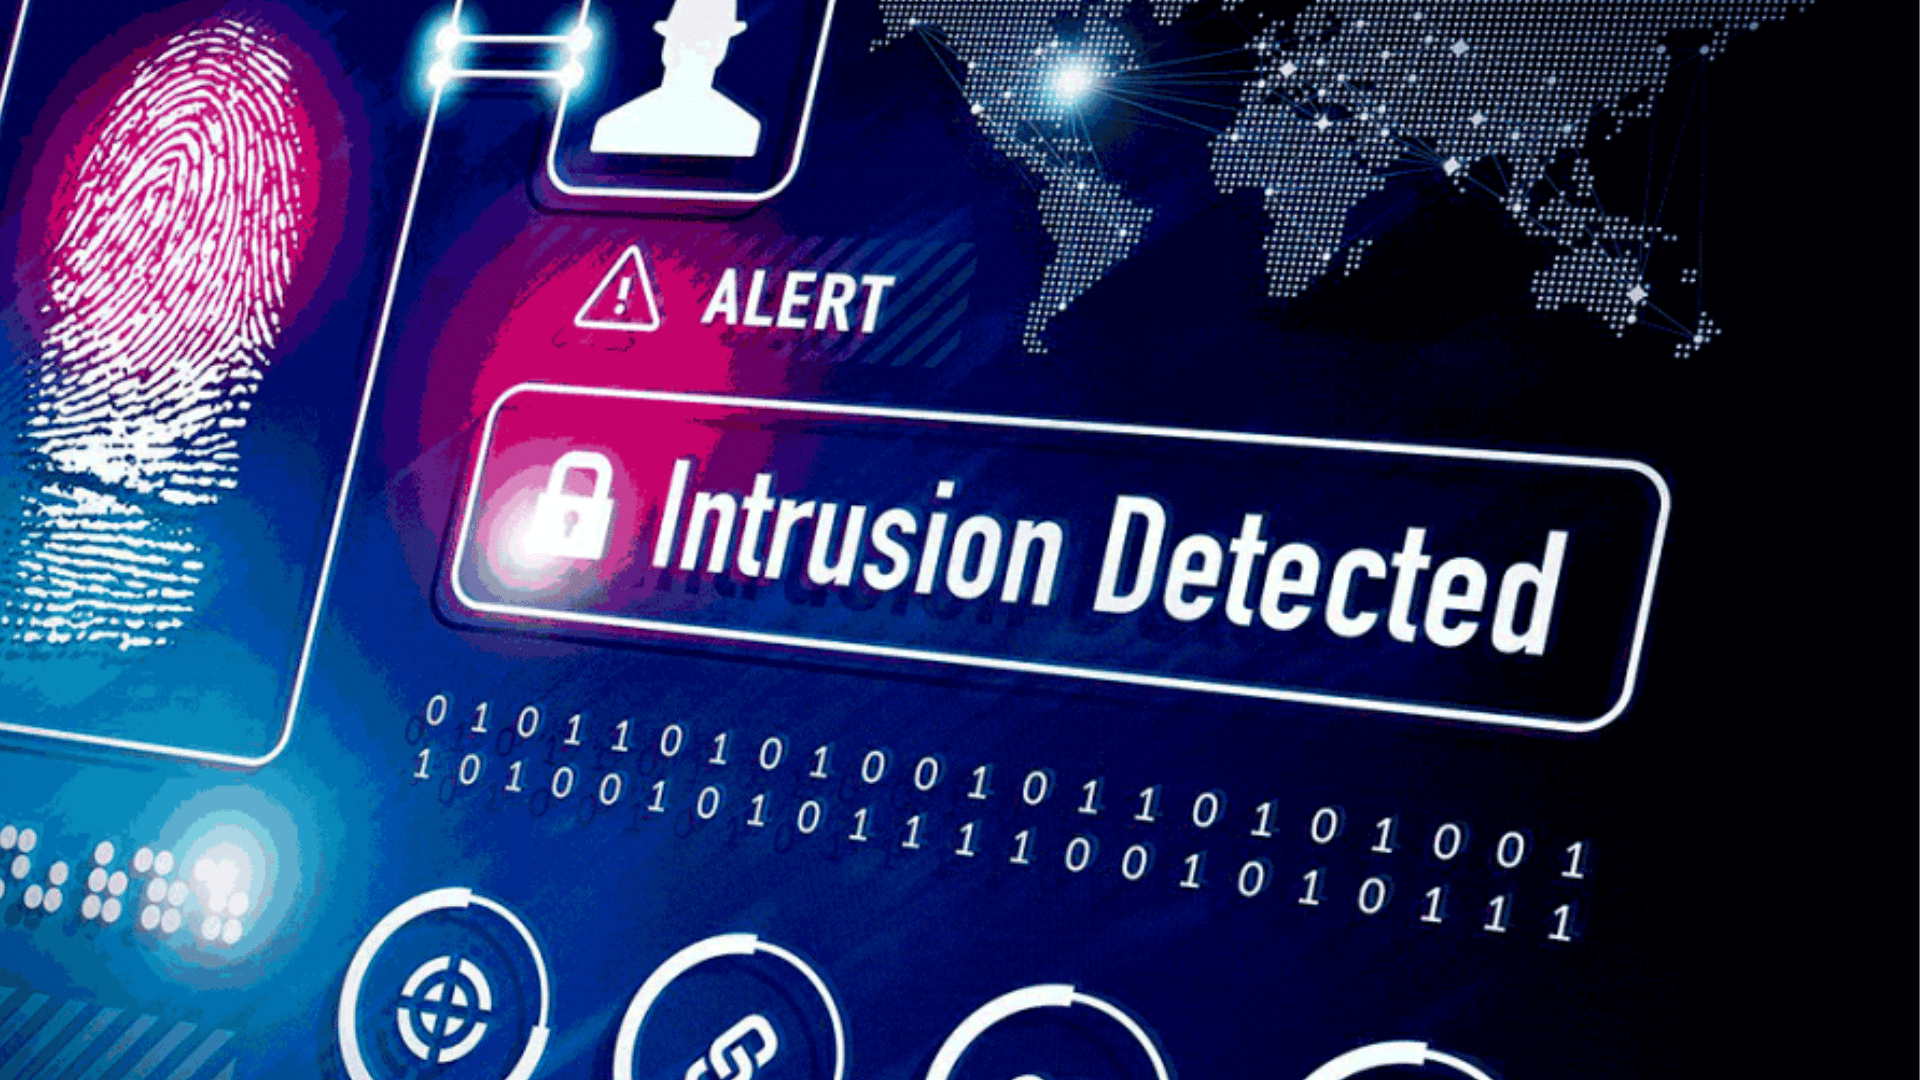 Intrusion detection system